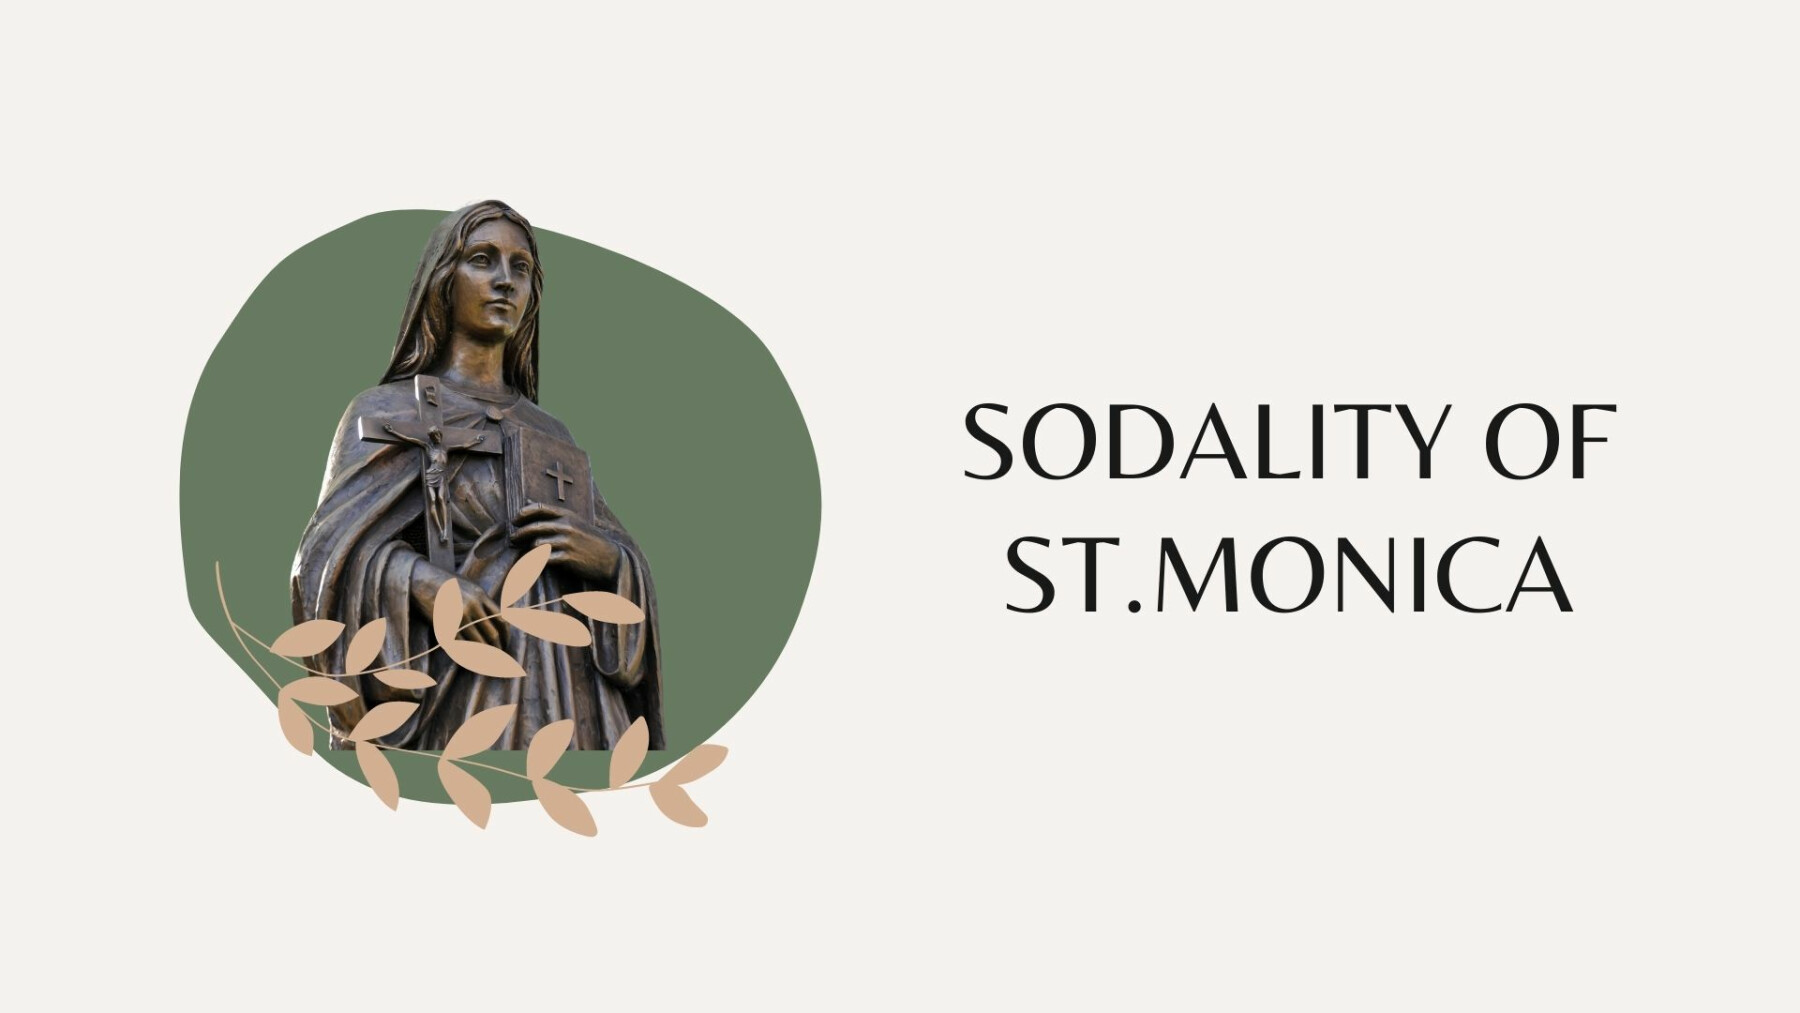 Sodality of St. Monica